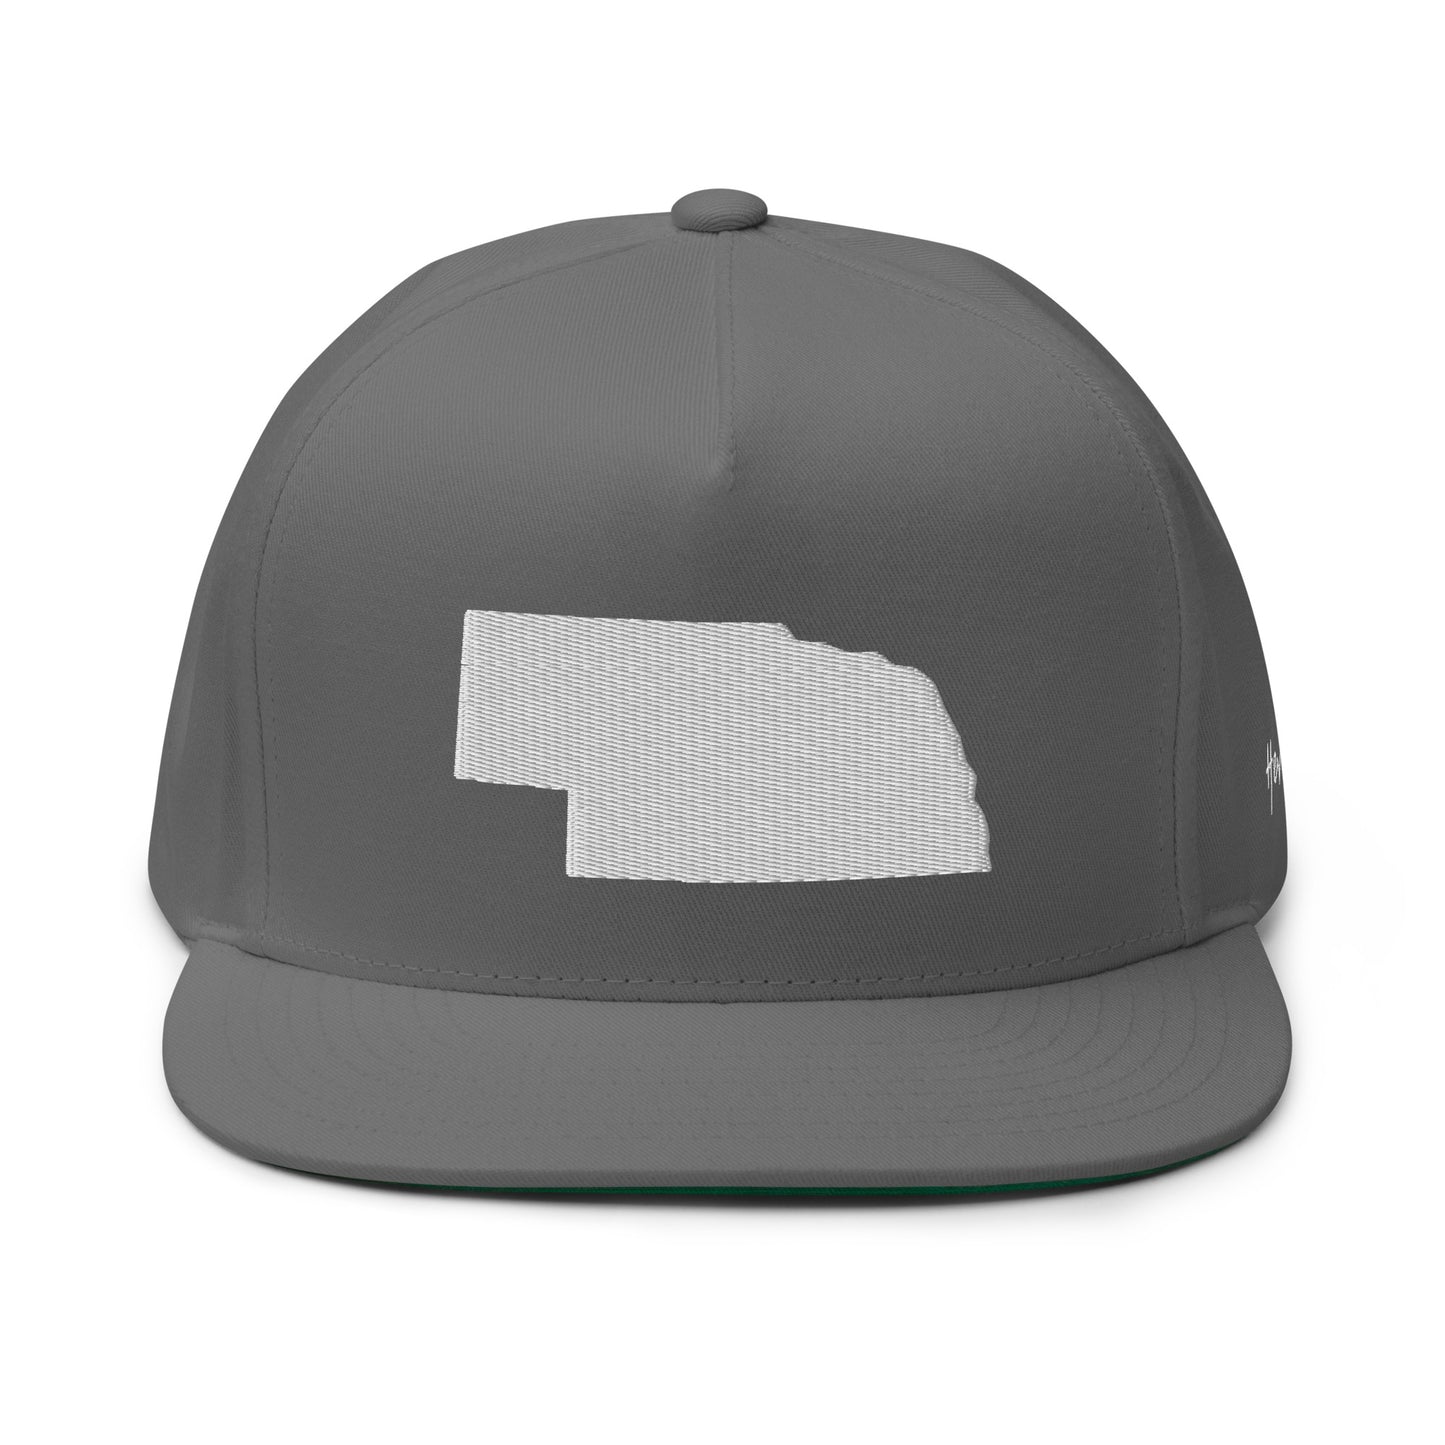 Nebraska State Silhouette 5 Panel A-Frame Snapback Hat